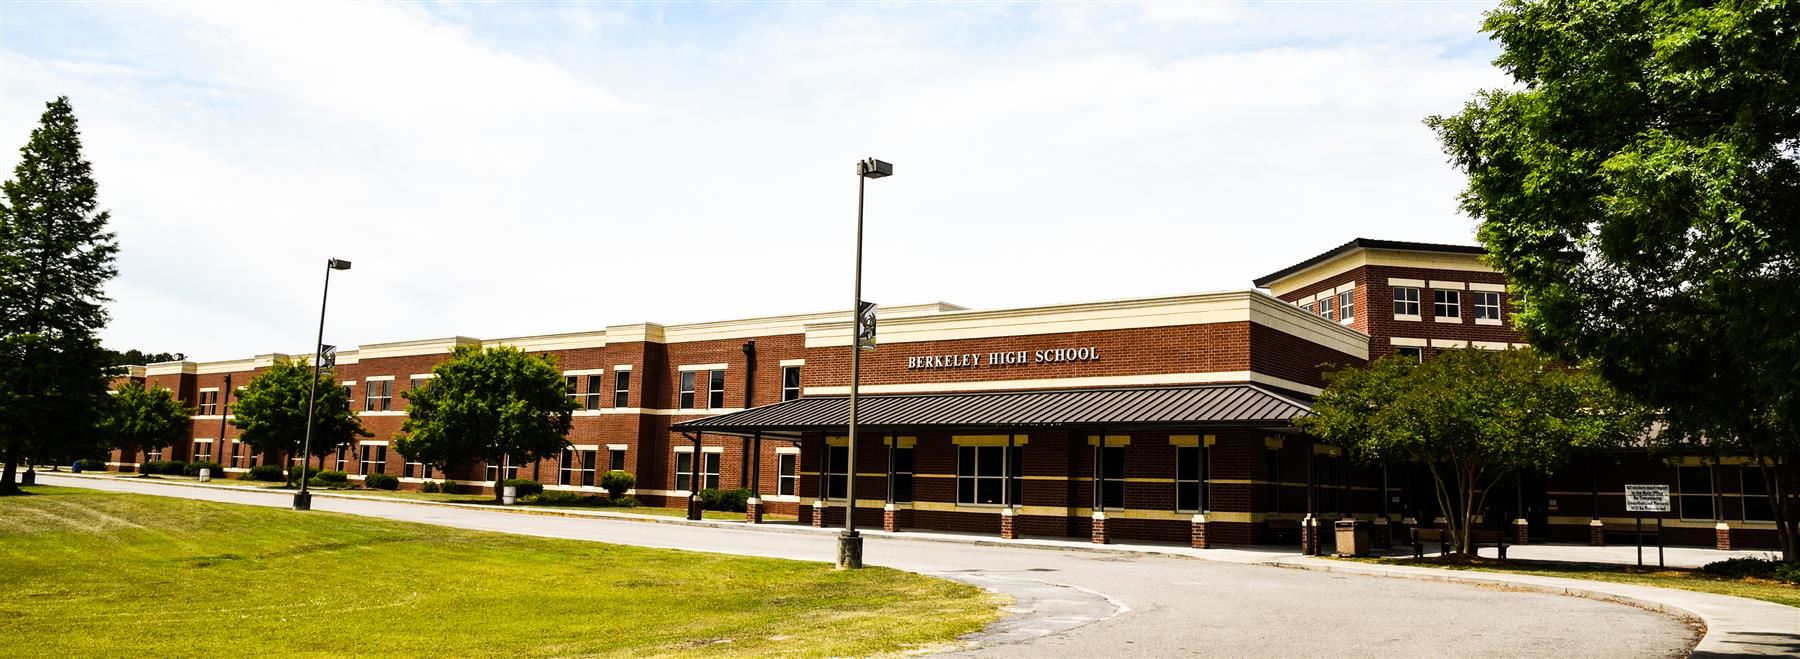 Image of Berkley High School Building - Berkeley High School is located in Moncks Corner, South Carolina, which is the county seat of Berkeley County.